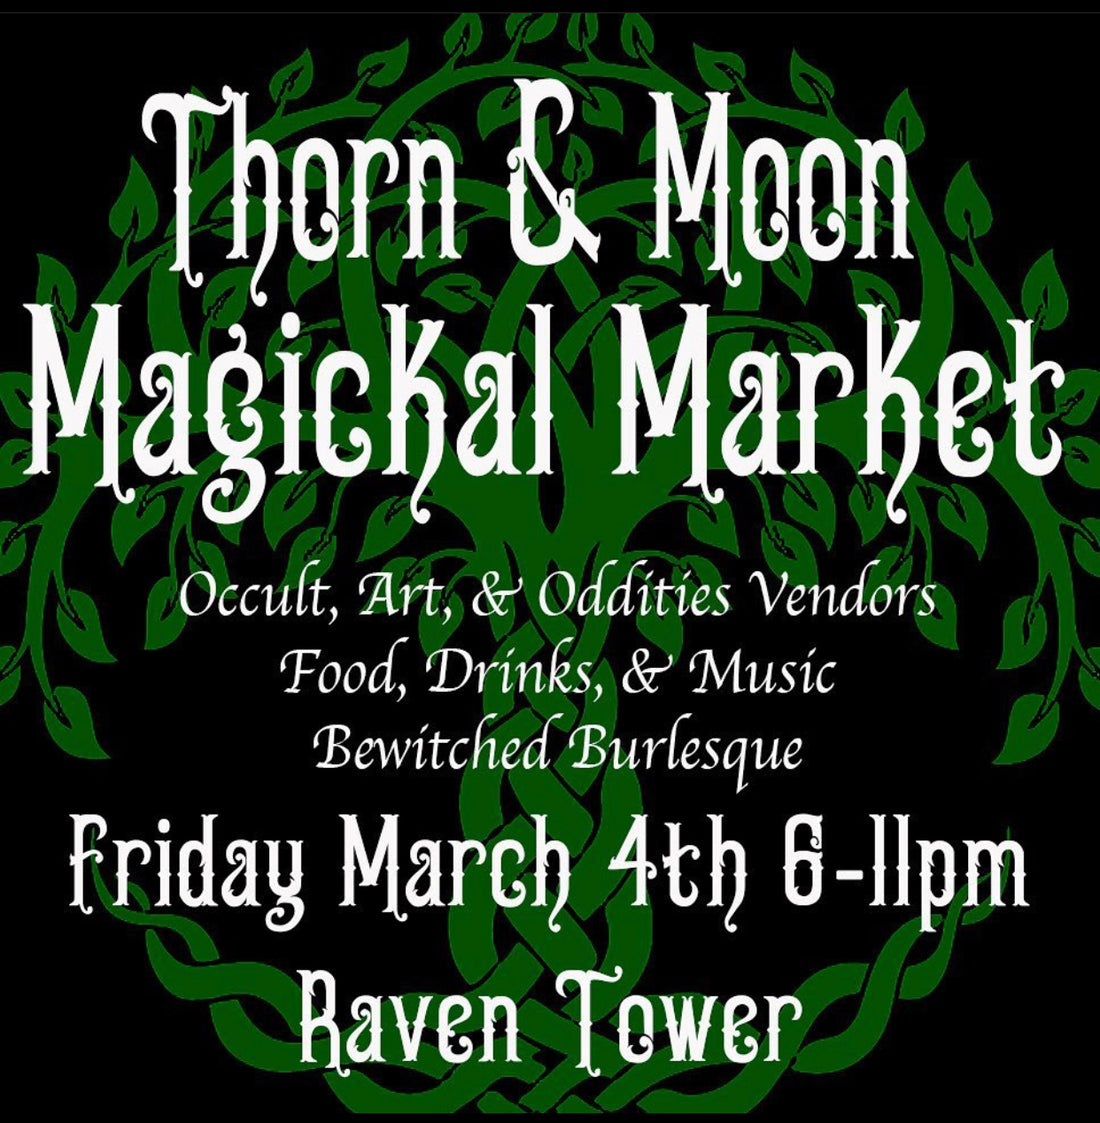 Thorn & moon magickal market